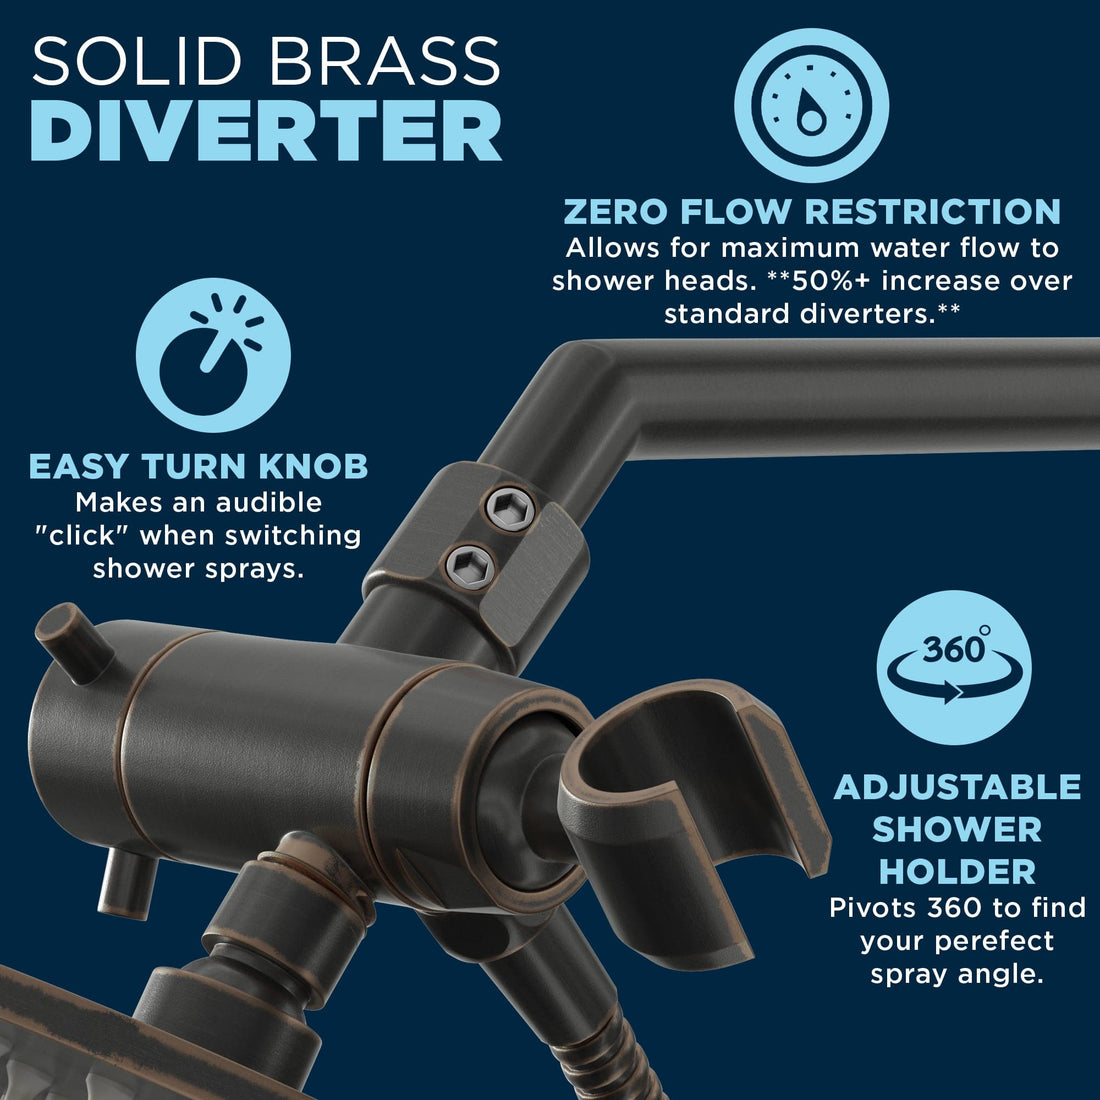 (Diverter) 3-Way Brass Diverter To Switch Valve from Rain Shower Head to Handheld Shower Head Oil Rubbed Bronze - The Shower Head Store